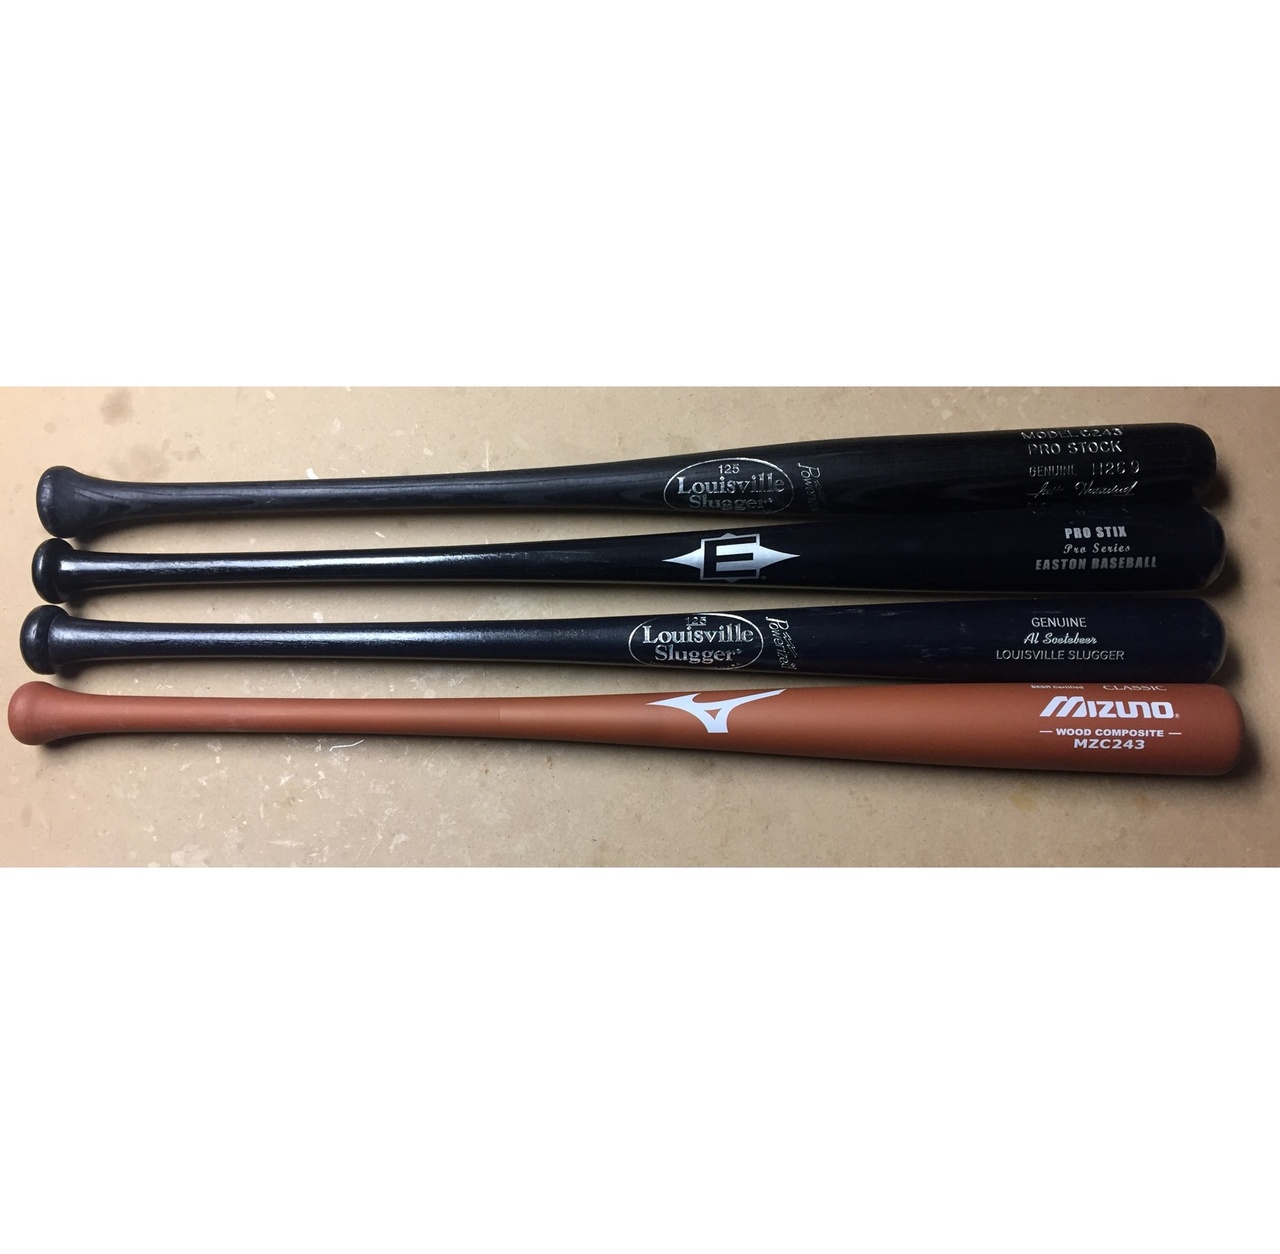 Mizuno composite, Easton Pro Stix, and Louisville Slugger wood bats in 34 inch.